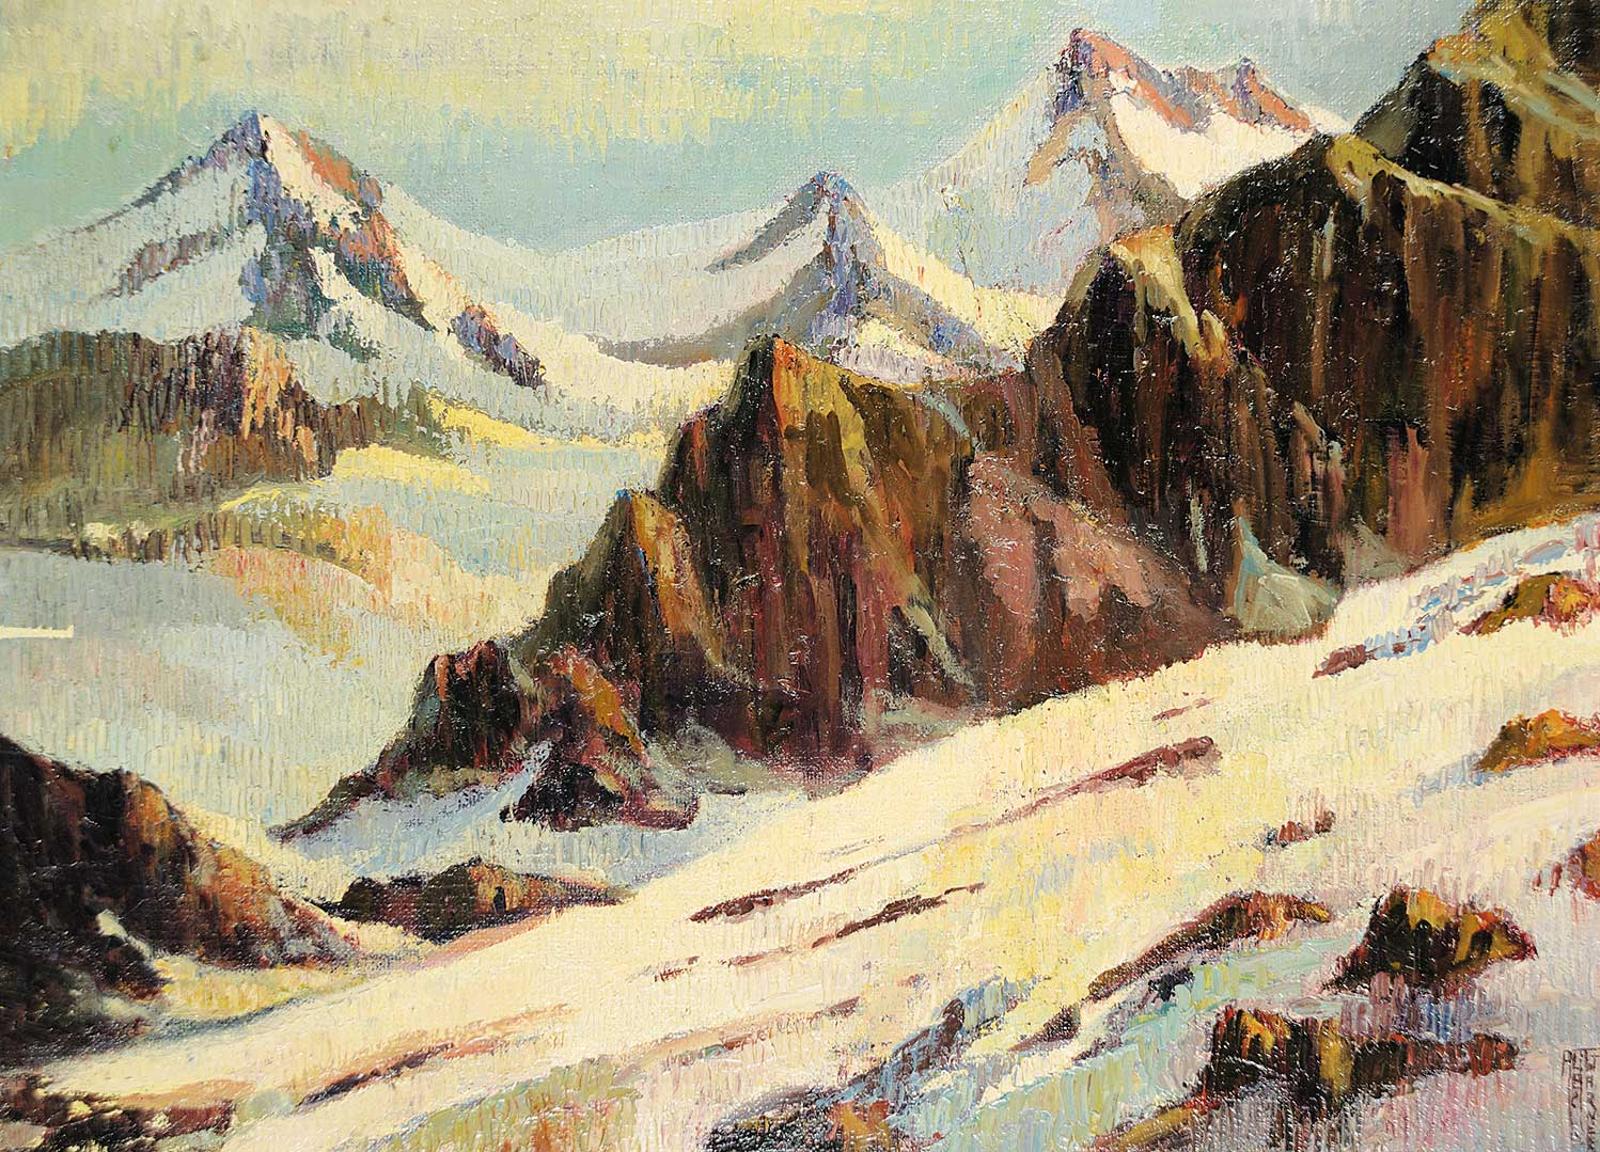 Alec John Garner (1897-1995) - Untitled - Glaciers